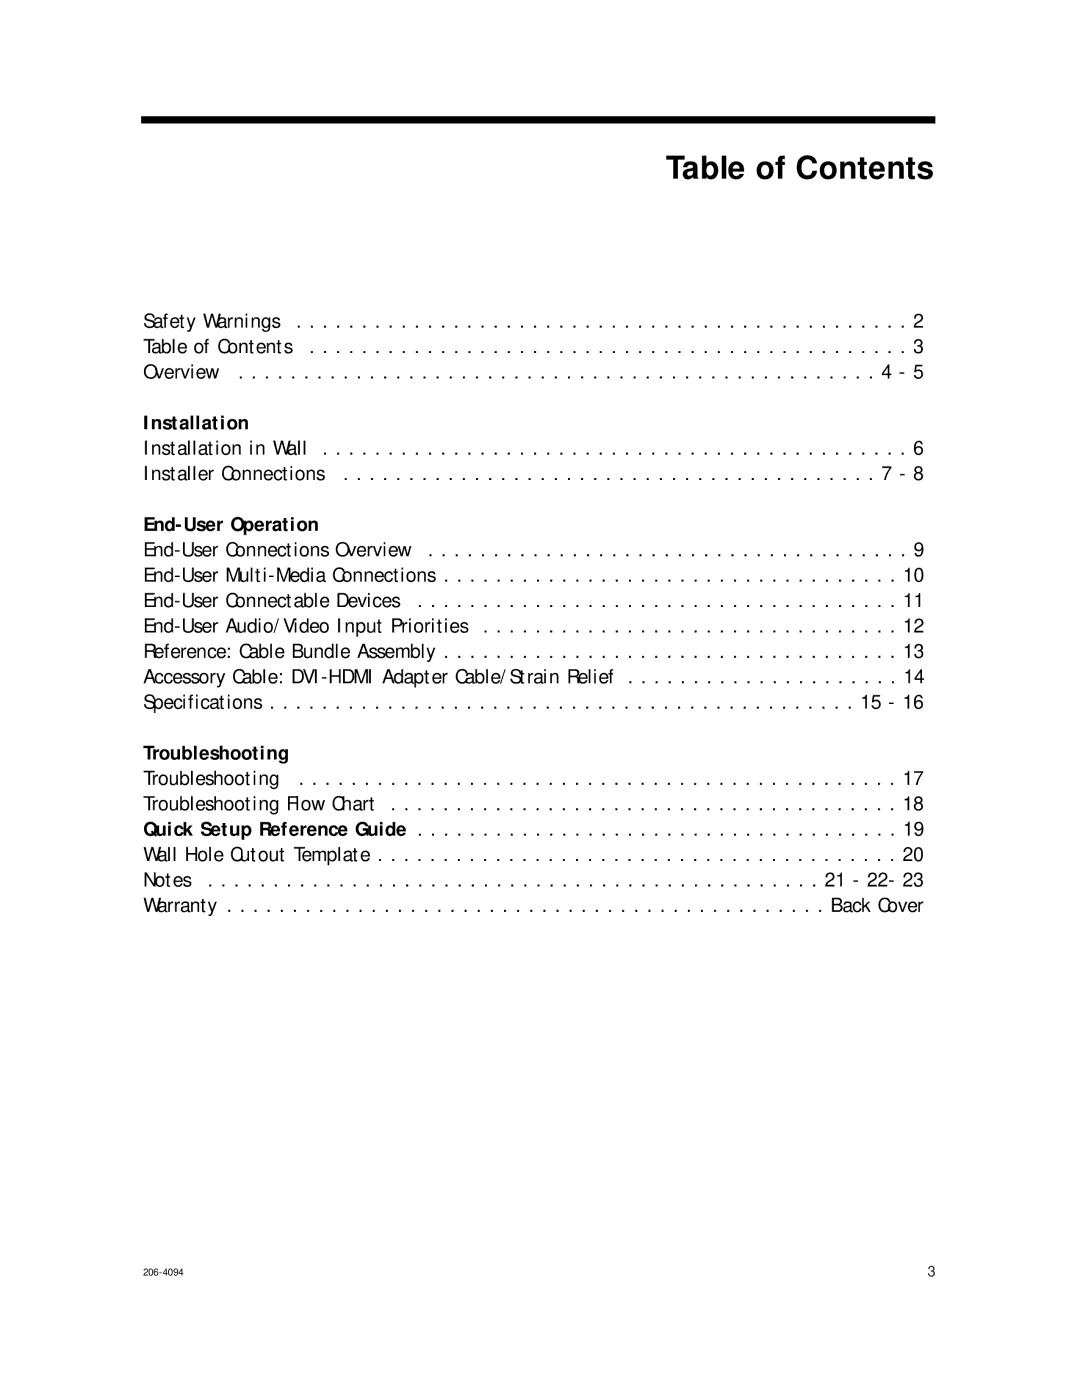 LG Electronics RJP-201B, 202B setup guide Table of Contents 